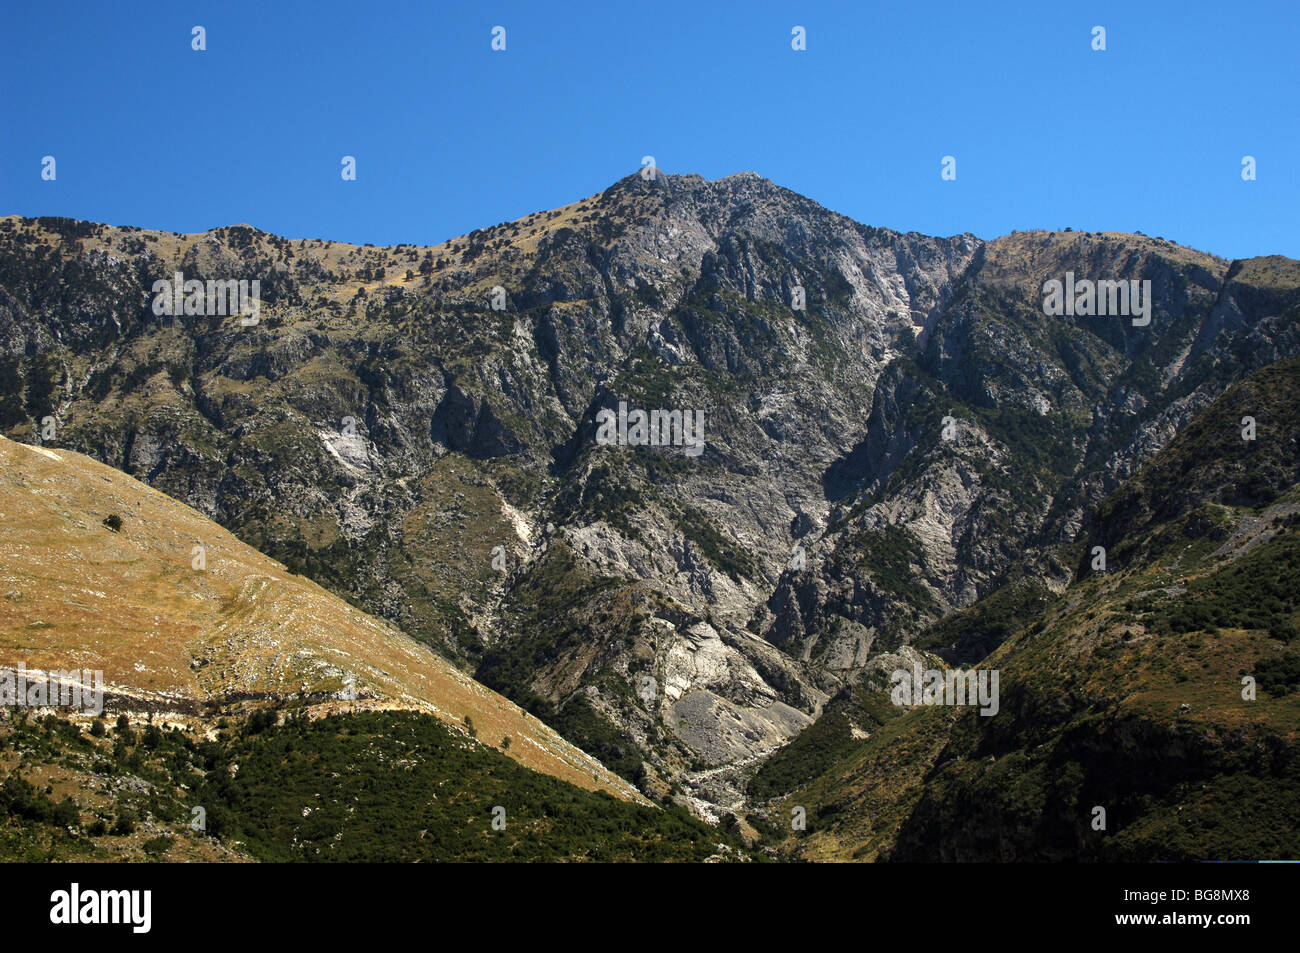 REPUBLIC OF ALBANIA. Mountainous landscape between Himara and Vlora. buscar. Çikes mountains. Stock Photo